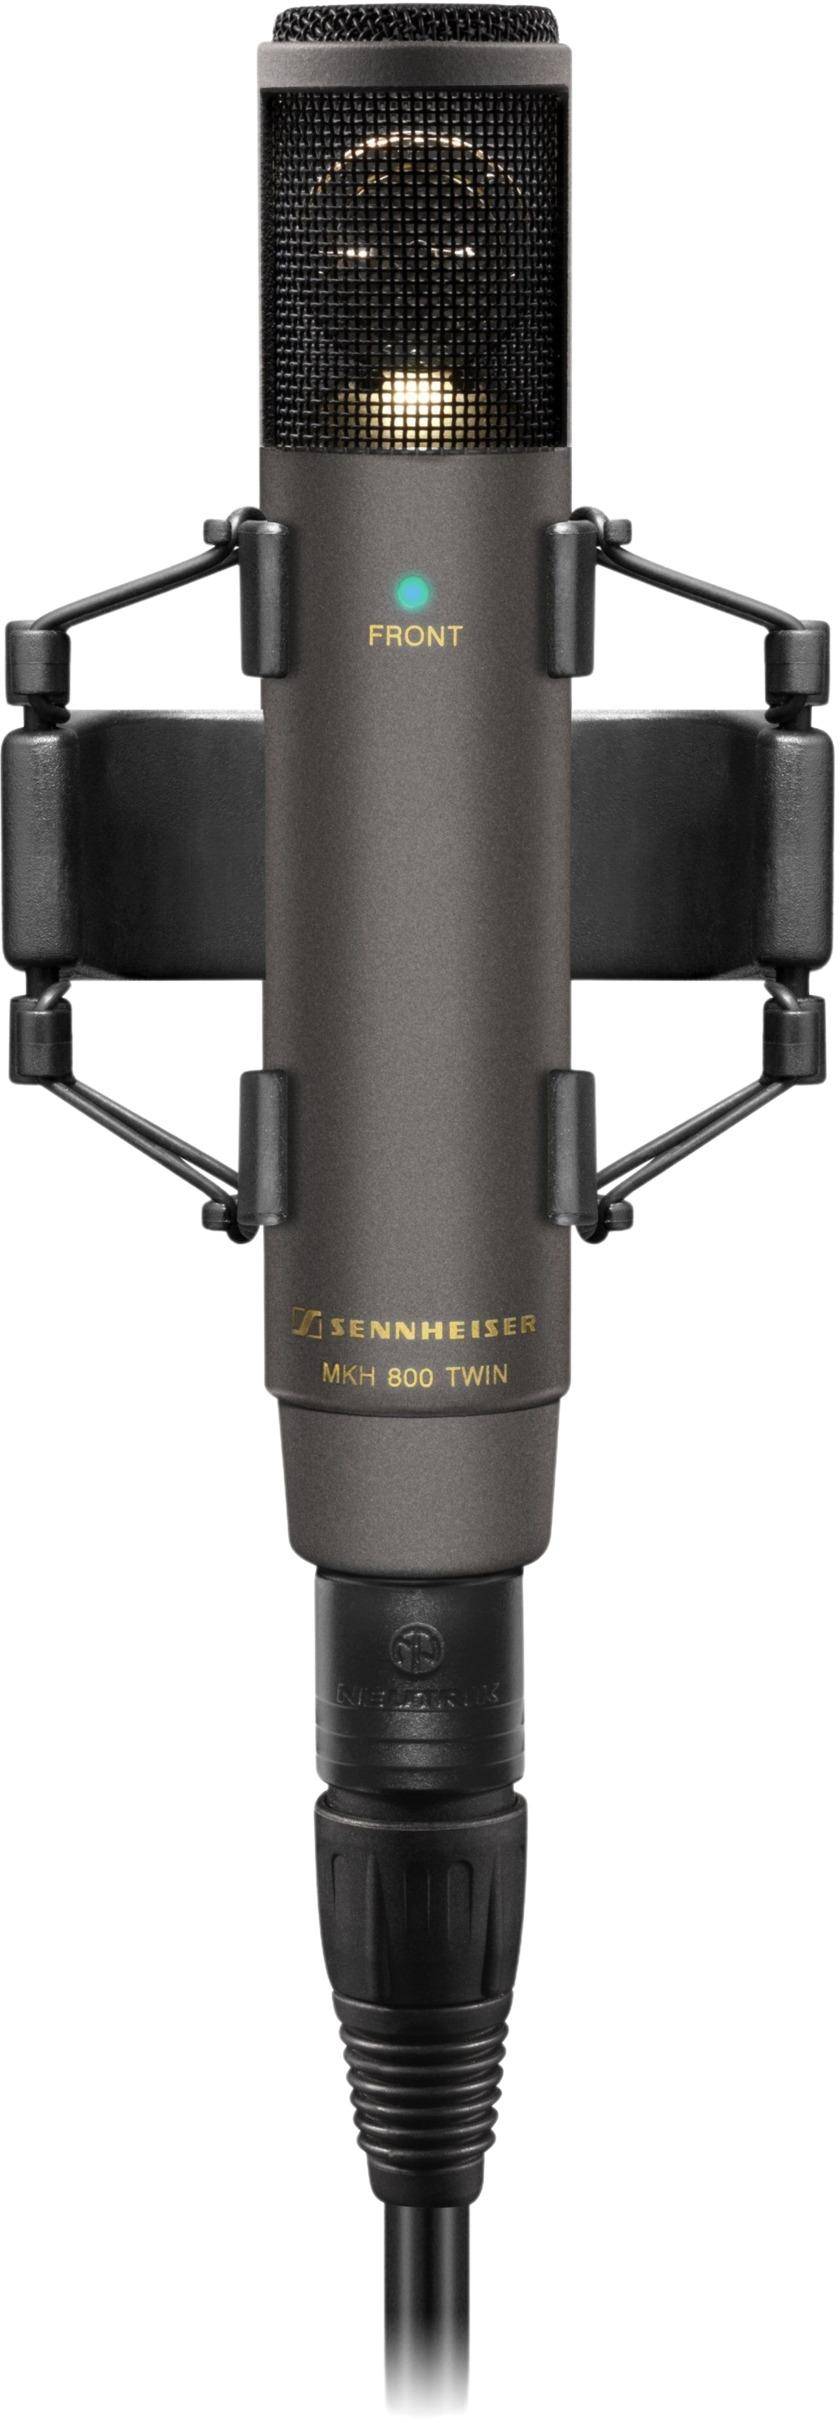 Sennheiser MKH 800 P48 Studio Condenser Microphone zoom image